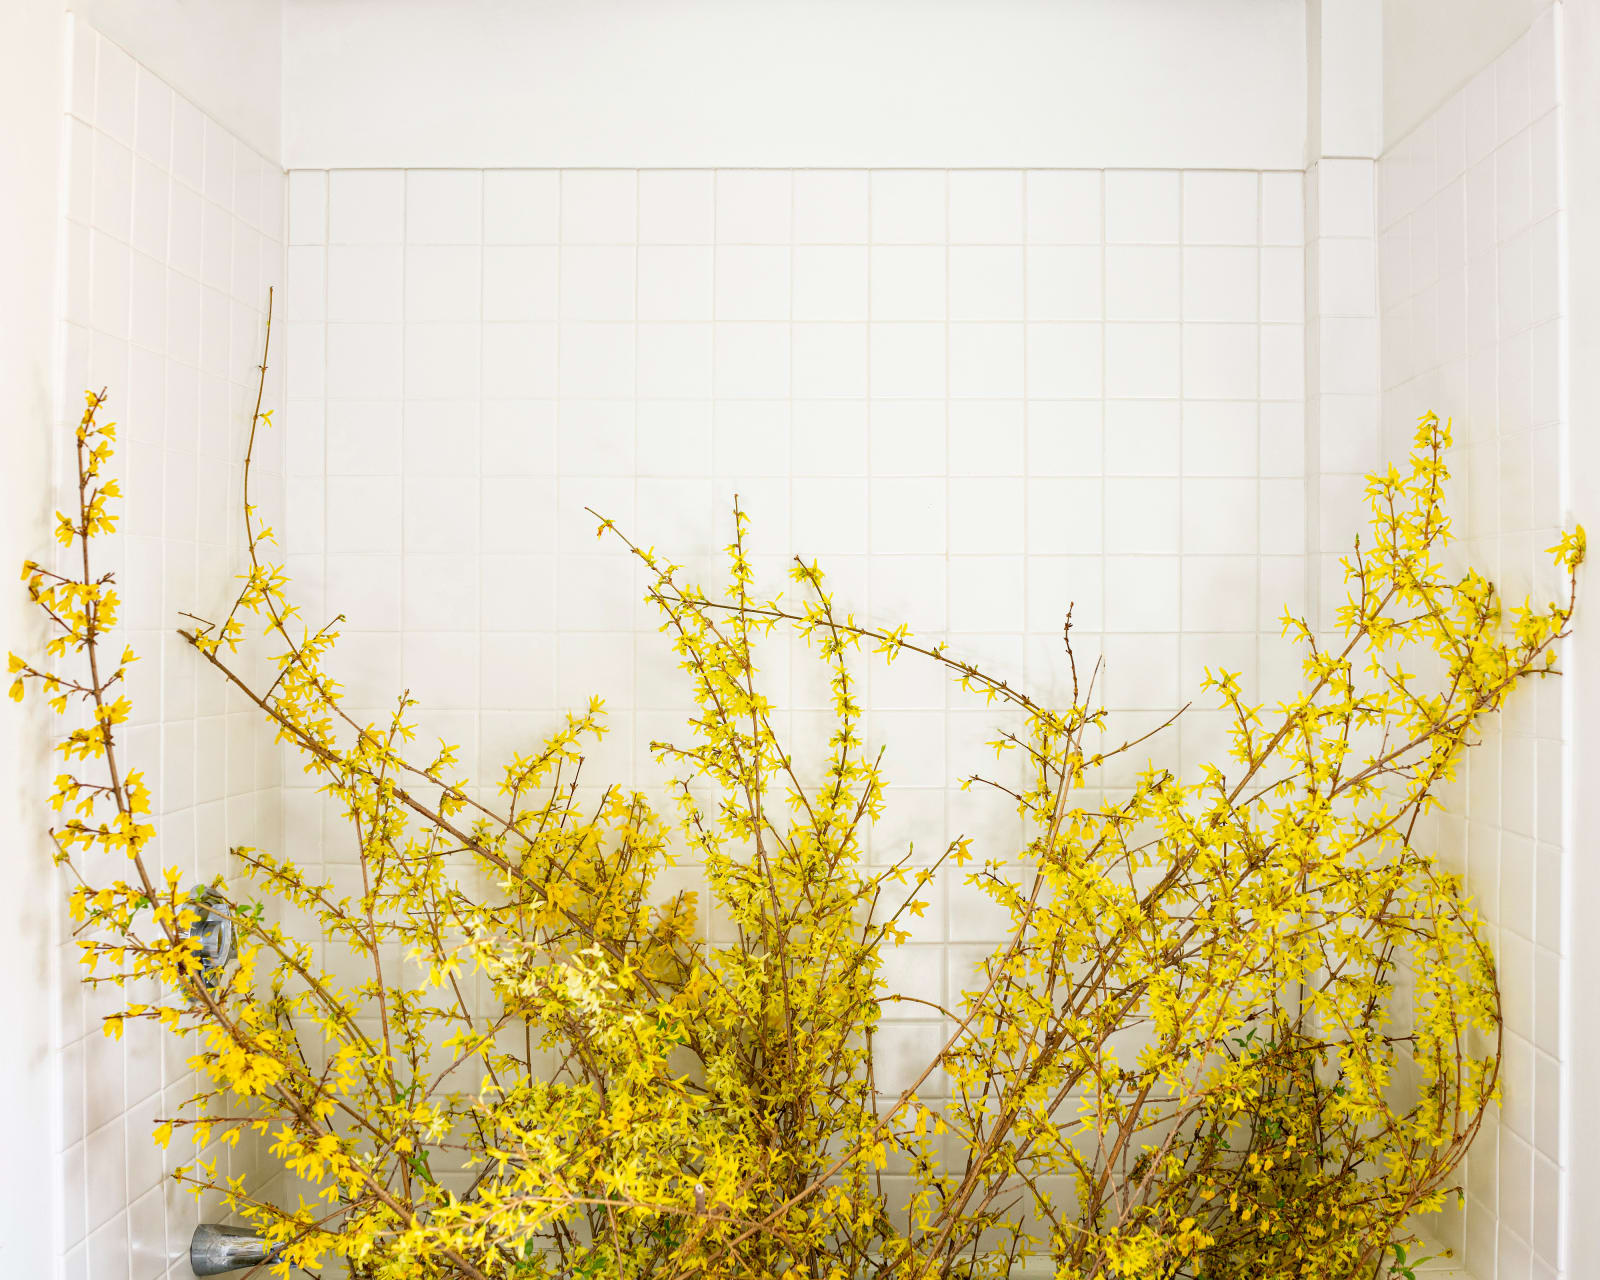 Cig Harvey, Forsythea (Force Blooming in the Bathtub), 2020